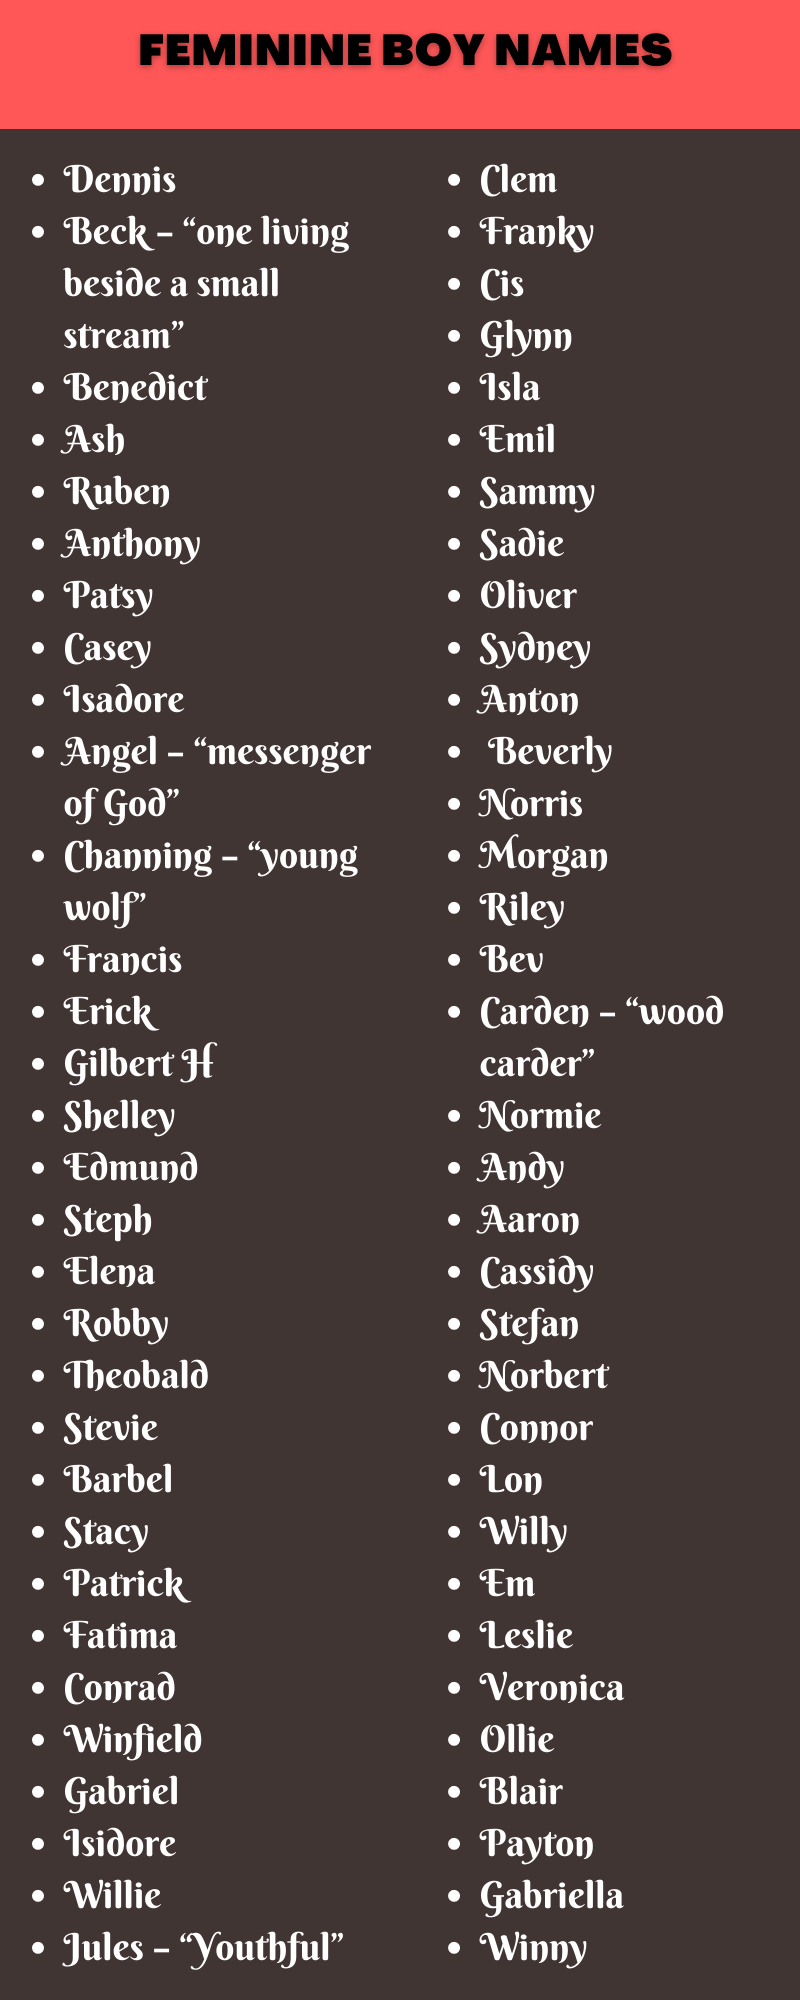 Feminine Boy Names